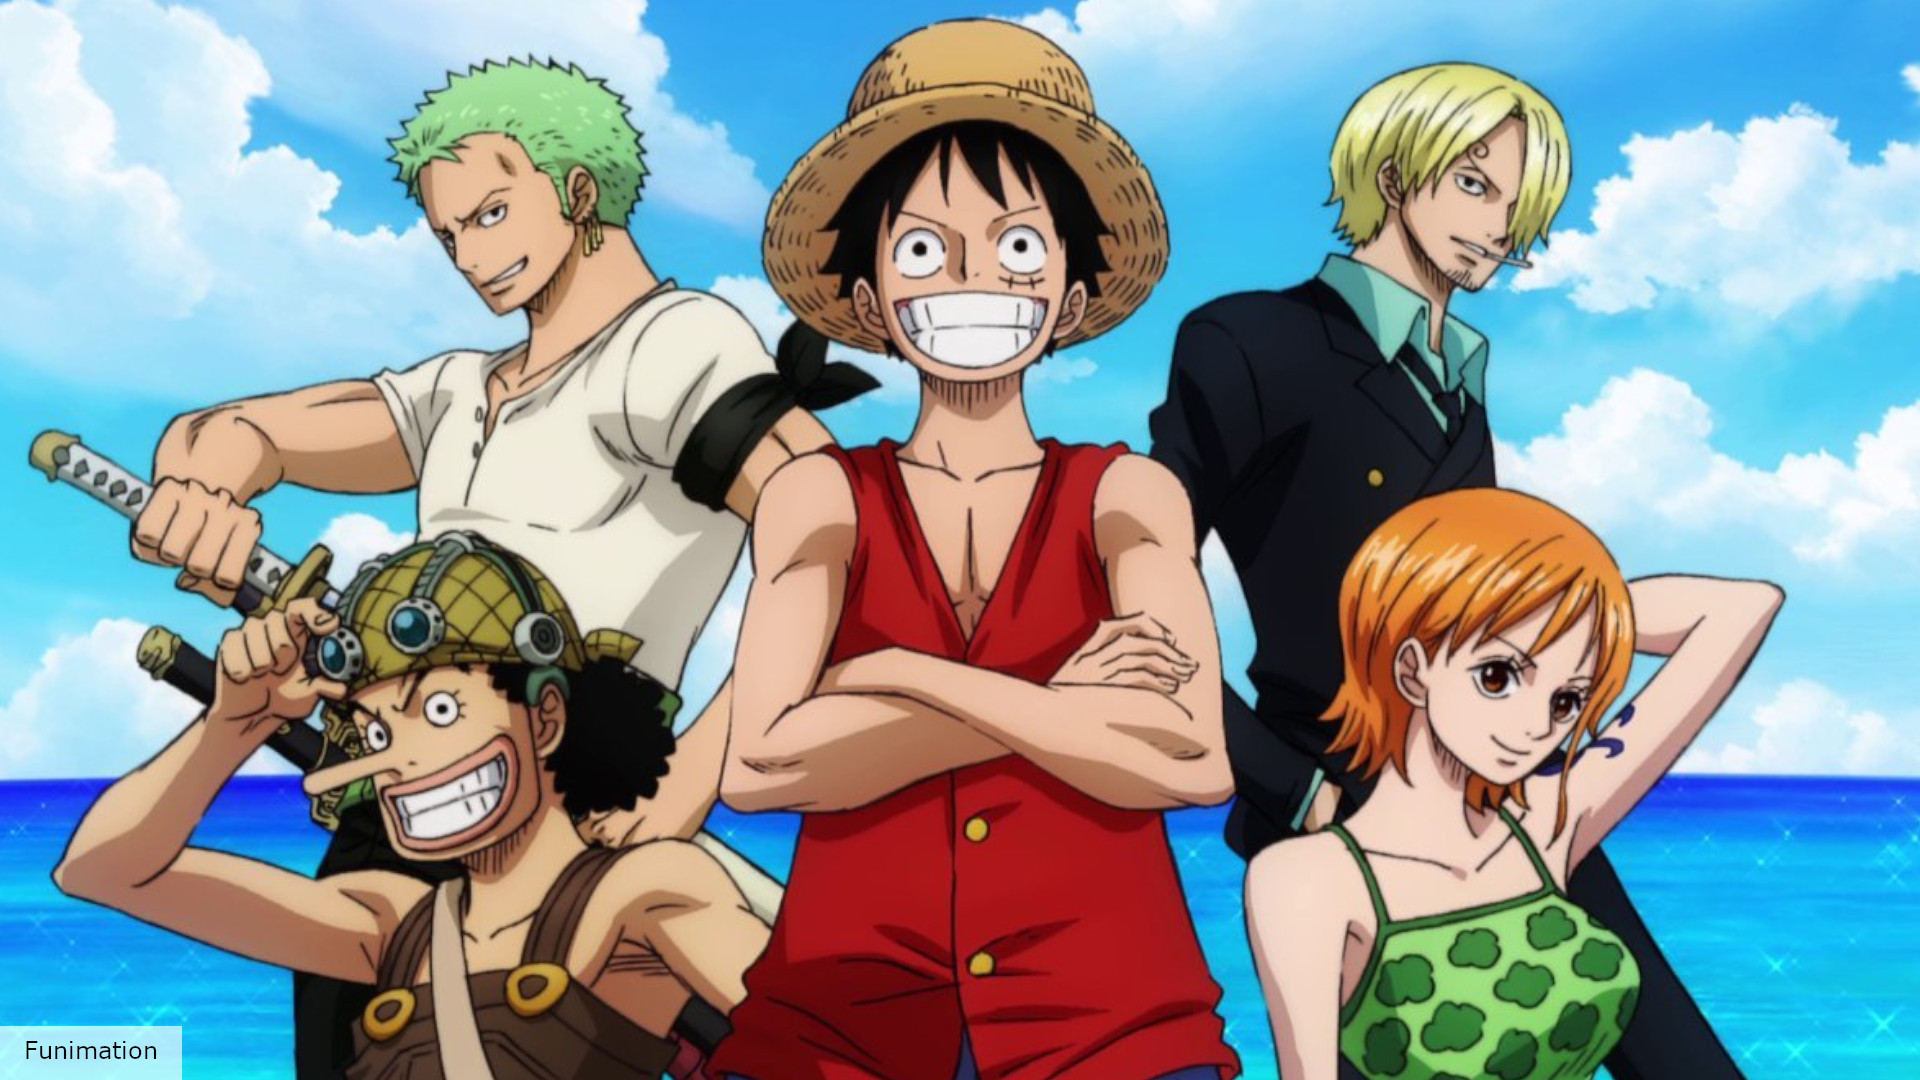 Netflixs One Piece LiveAction Adaptation Adds Six More Cast Members